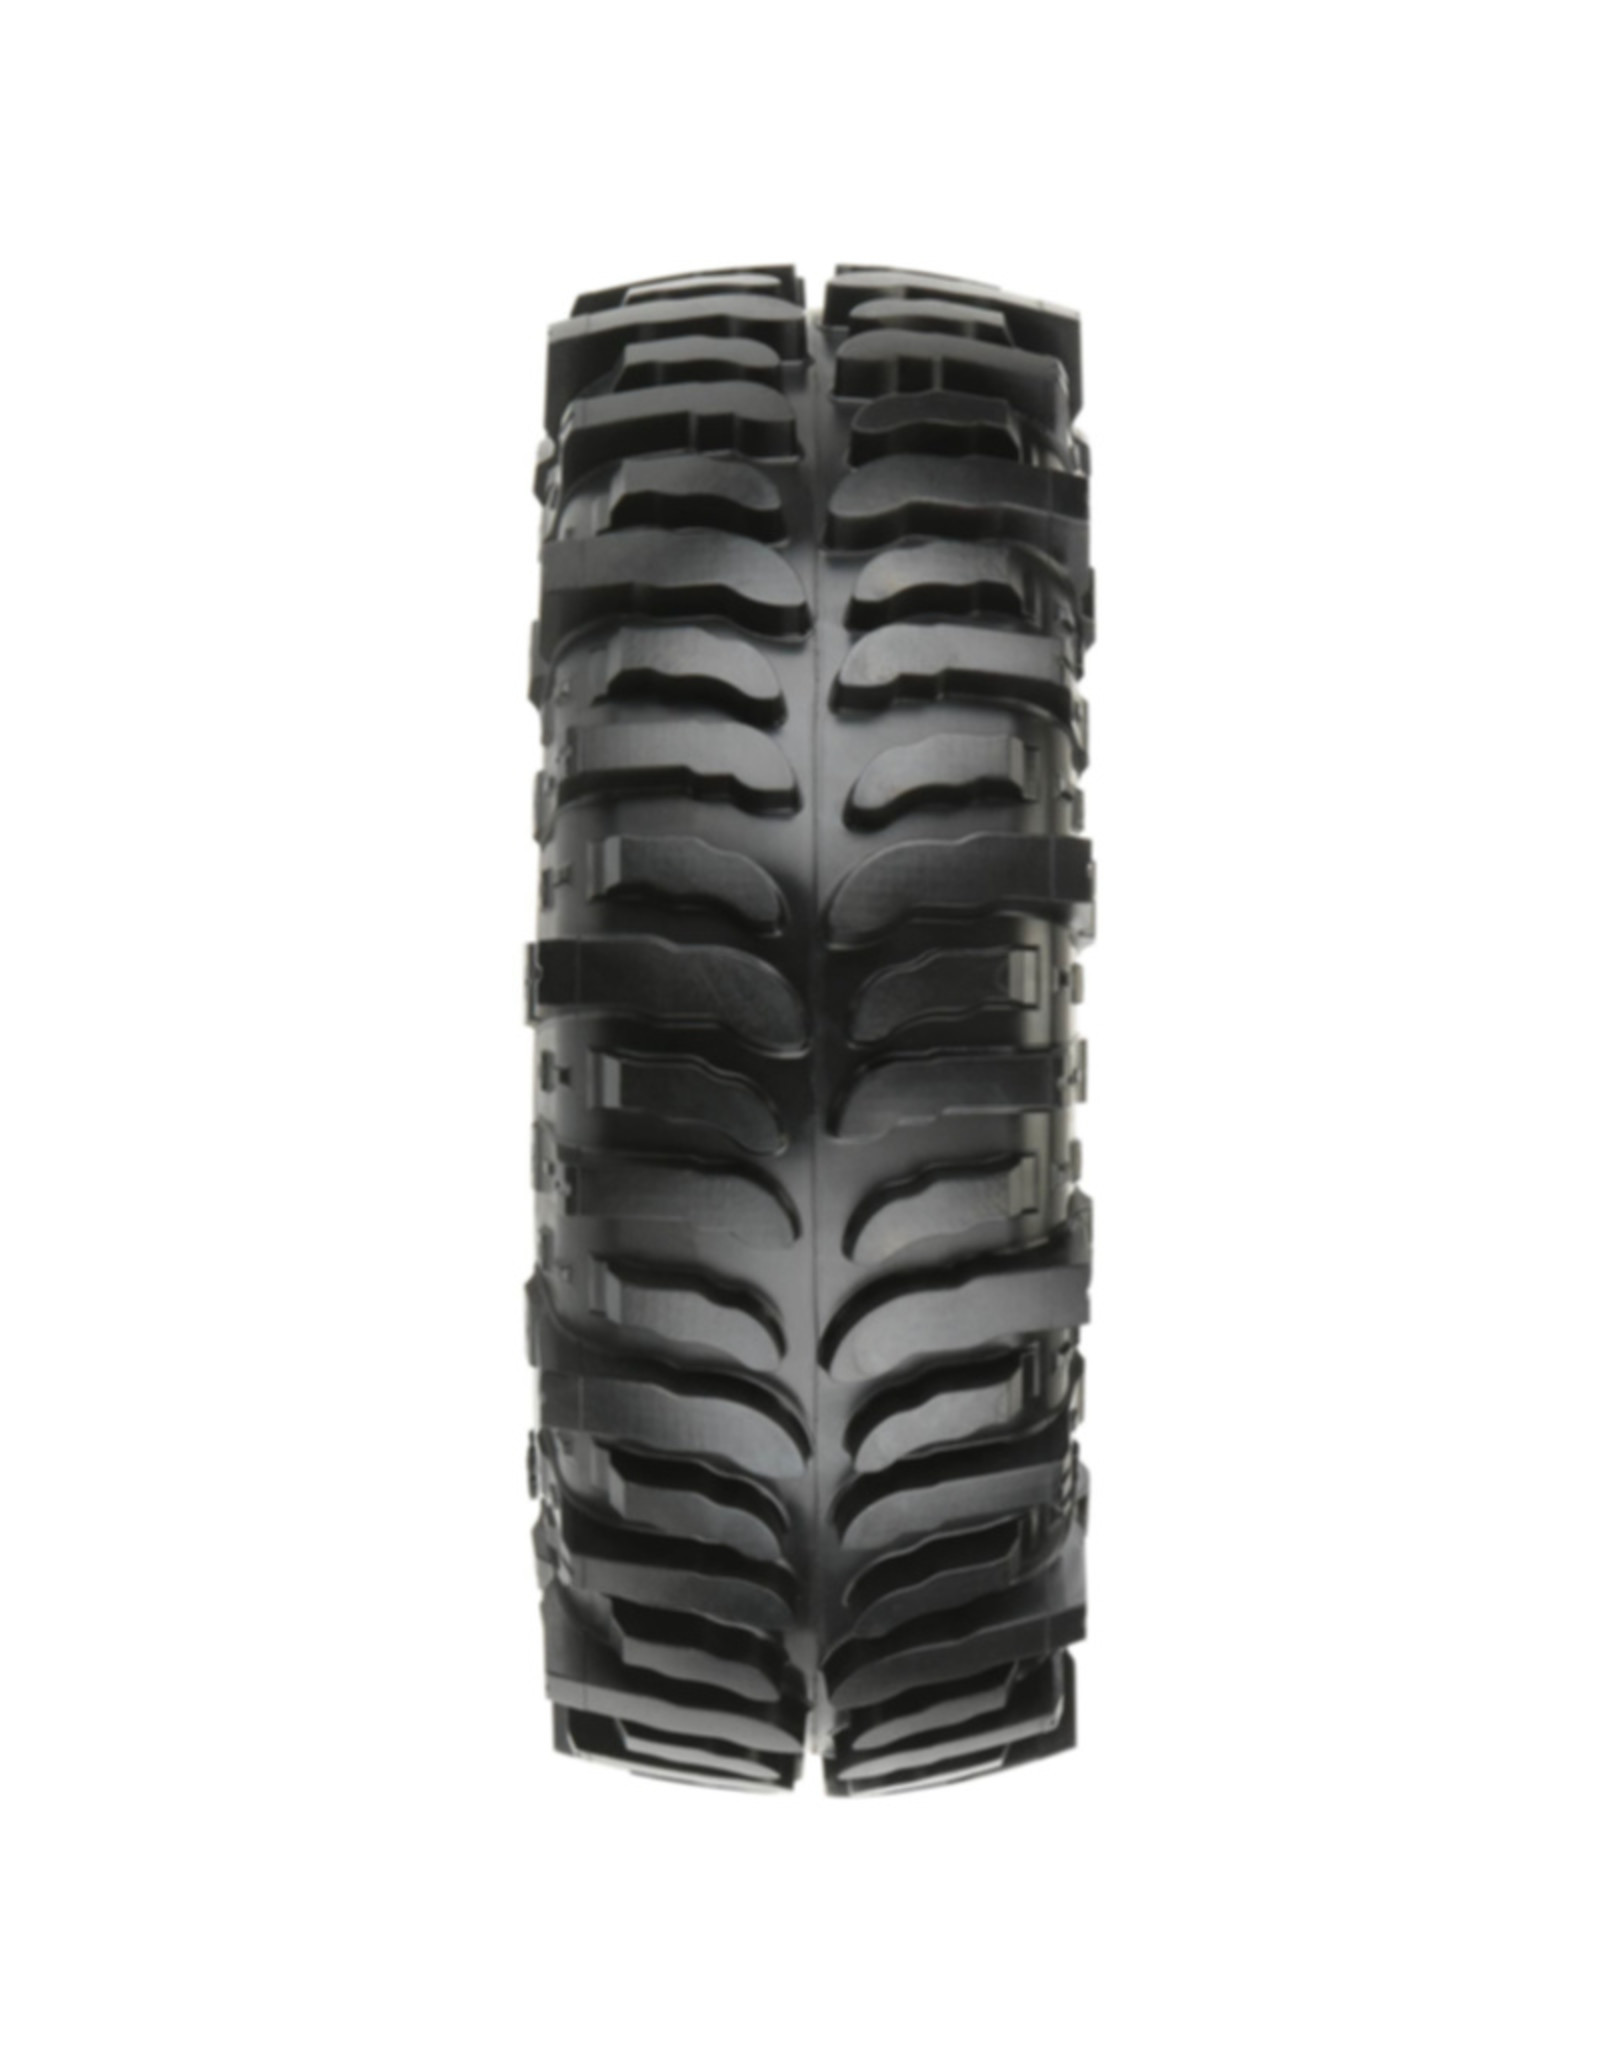 Pro-Line Racing PRO1013314 Interco Bogger 1.9 G8 Rock Terrain Tire (2)